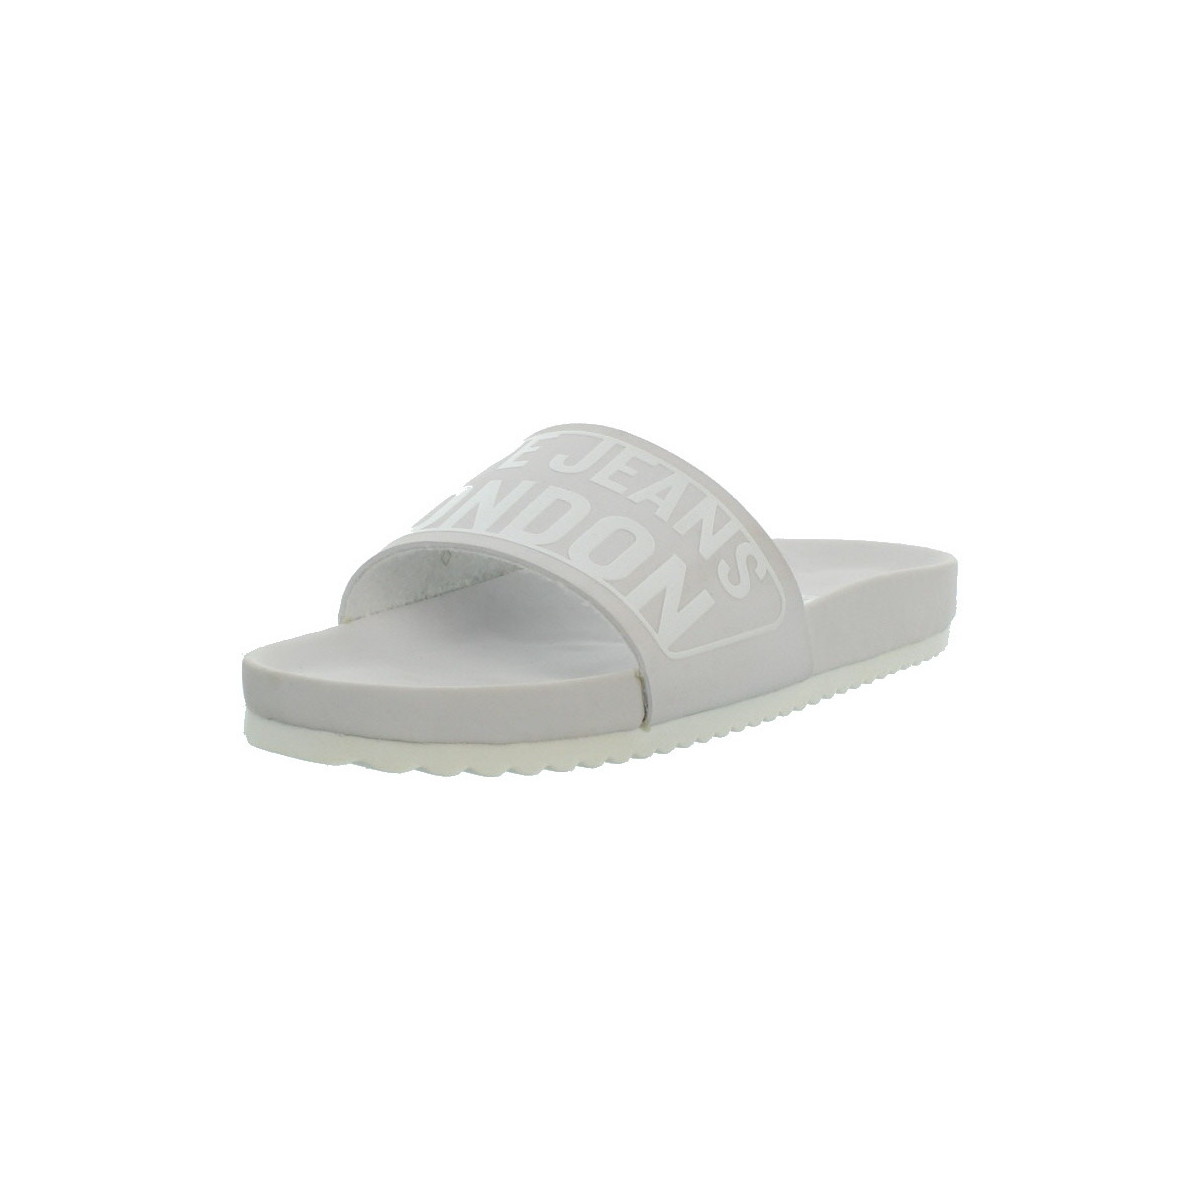 Chaussures Femme Sandales et Nu-pieds Pepe jeans Sandales  ref_pep43365-800-blanc Blanc